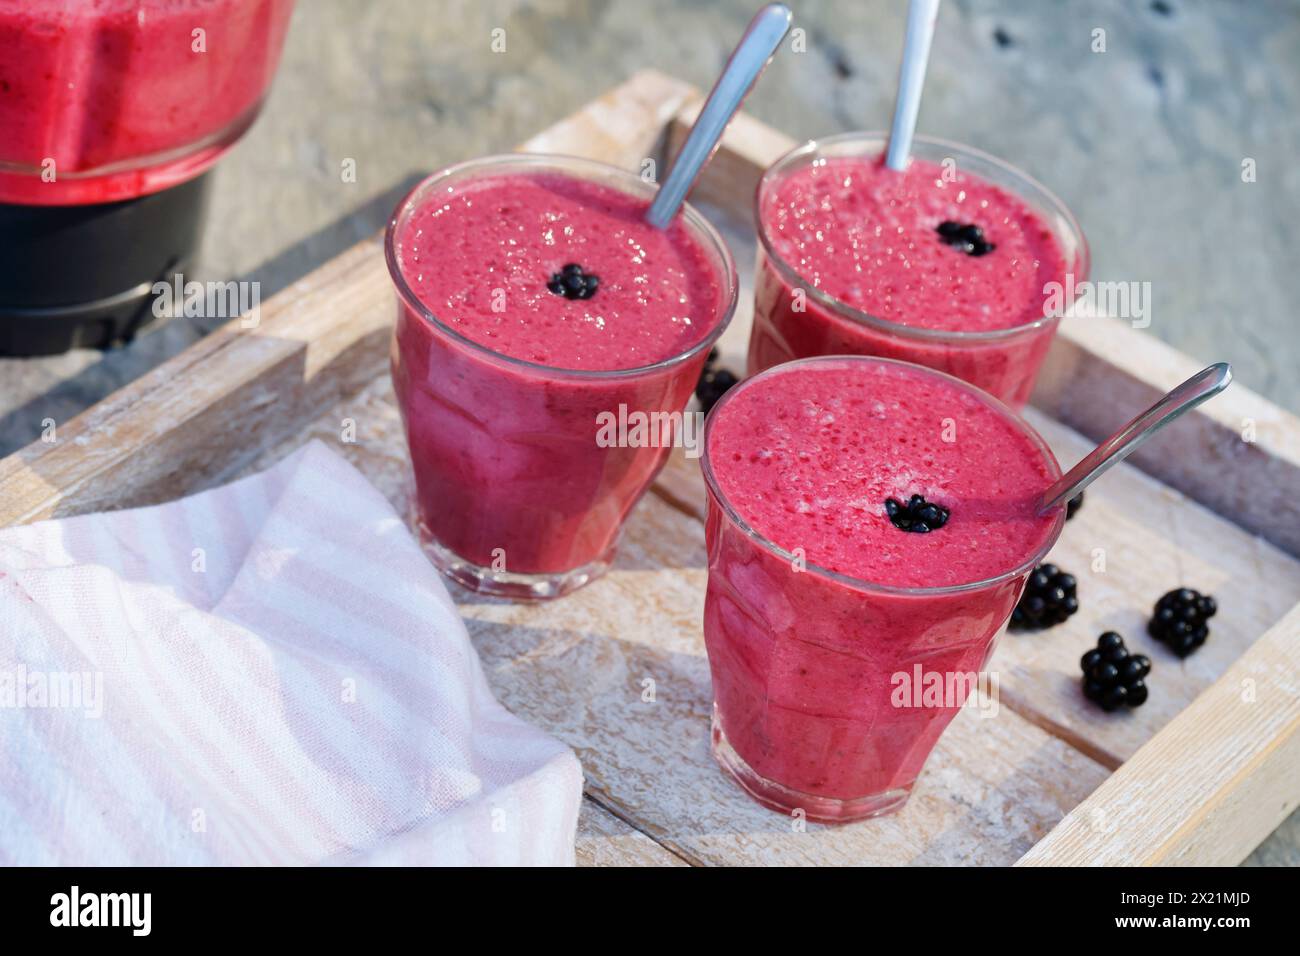 selfmade vegan blackberry milkshake, step 5: ready-made milkshakes, series image 5/5 Stock Photo